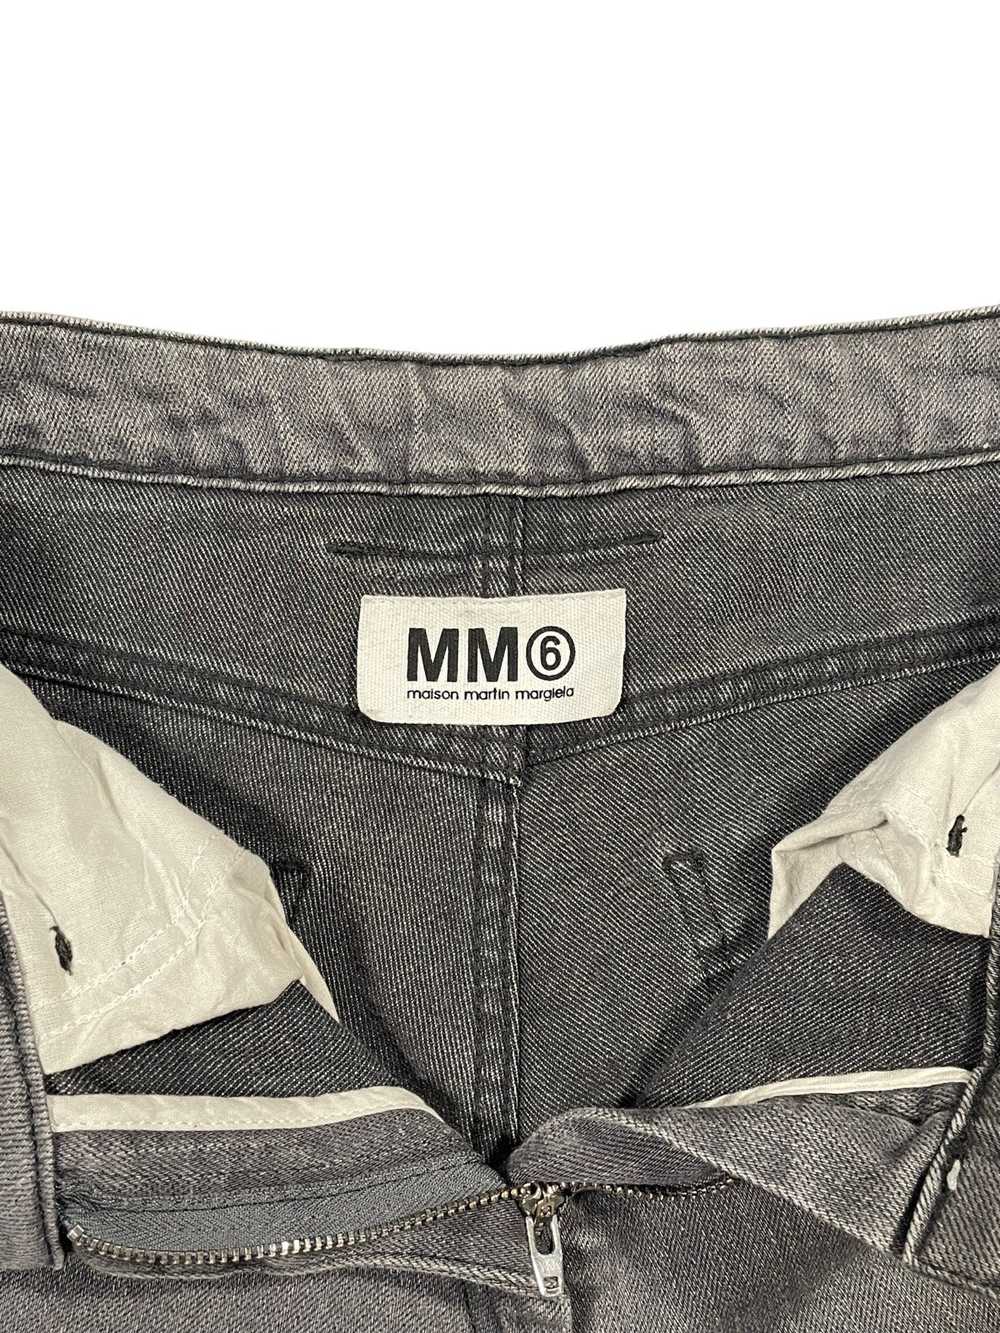 Maison Margiela MM6 Faded Denim Biker Jeans - image 8